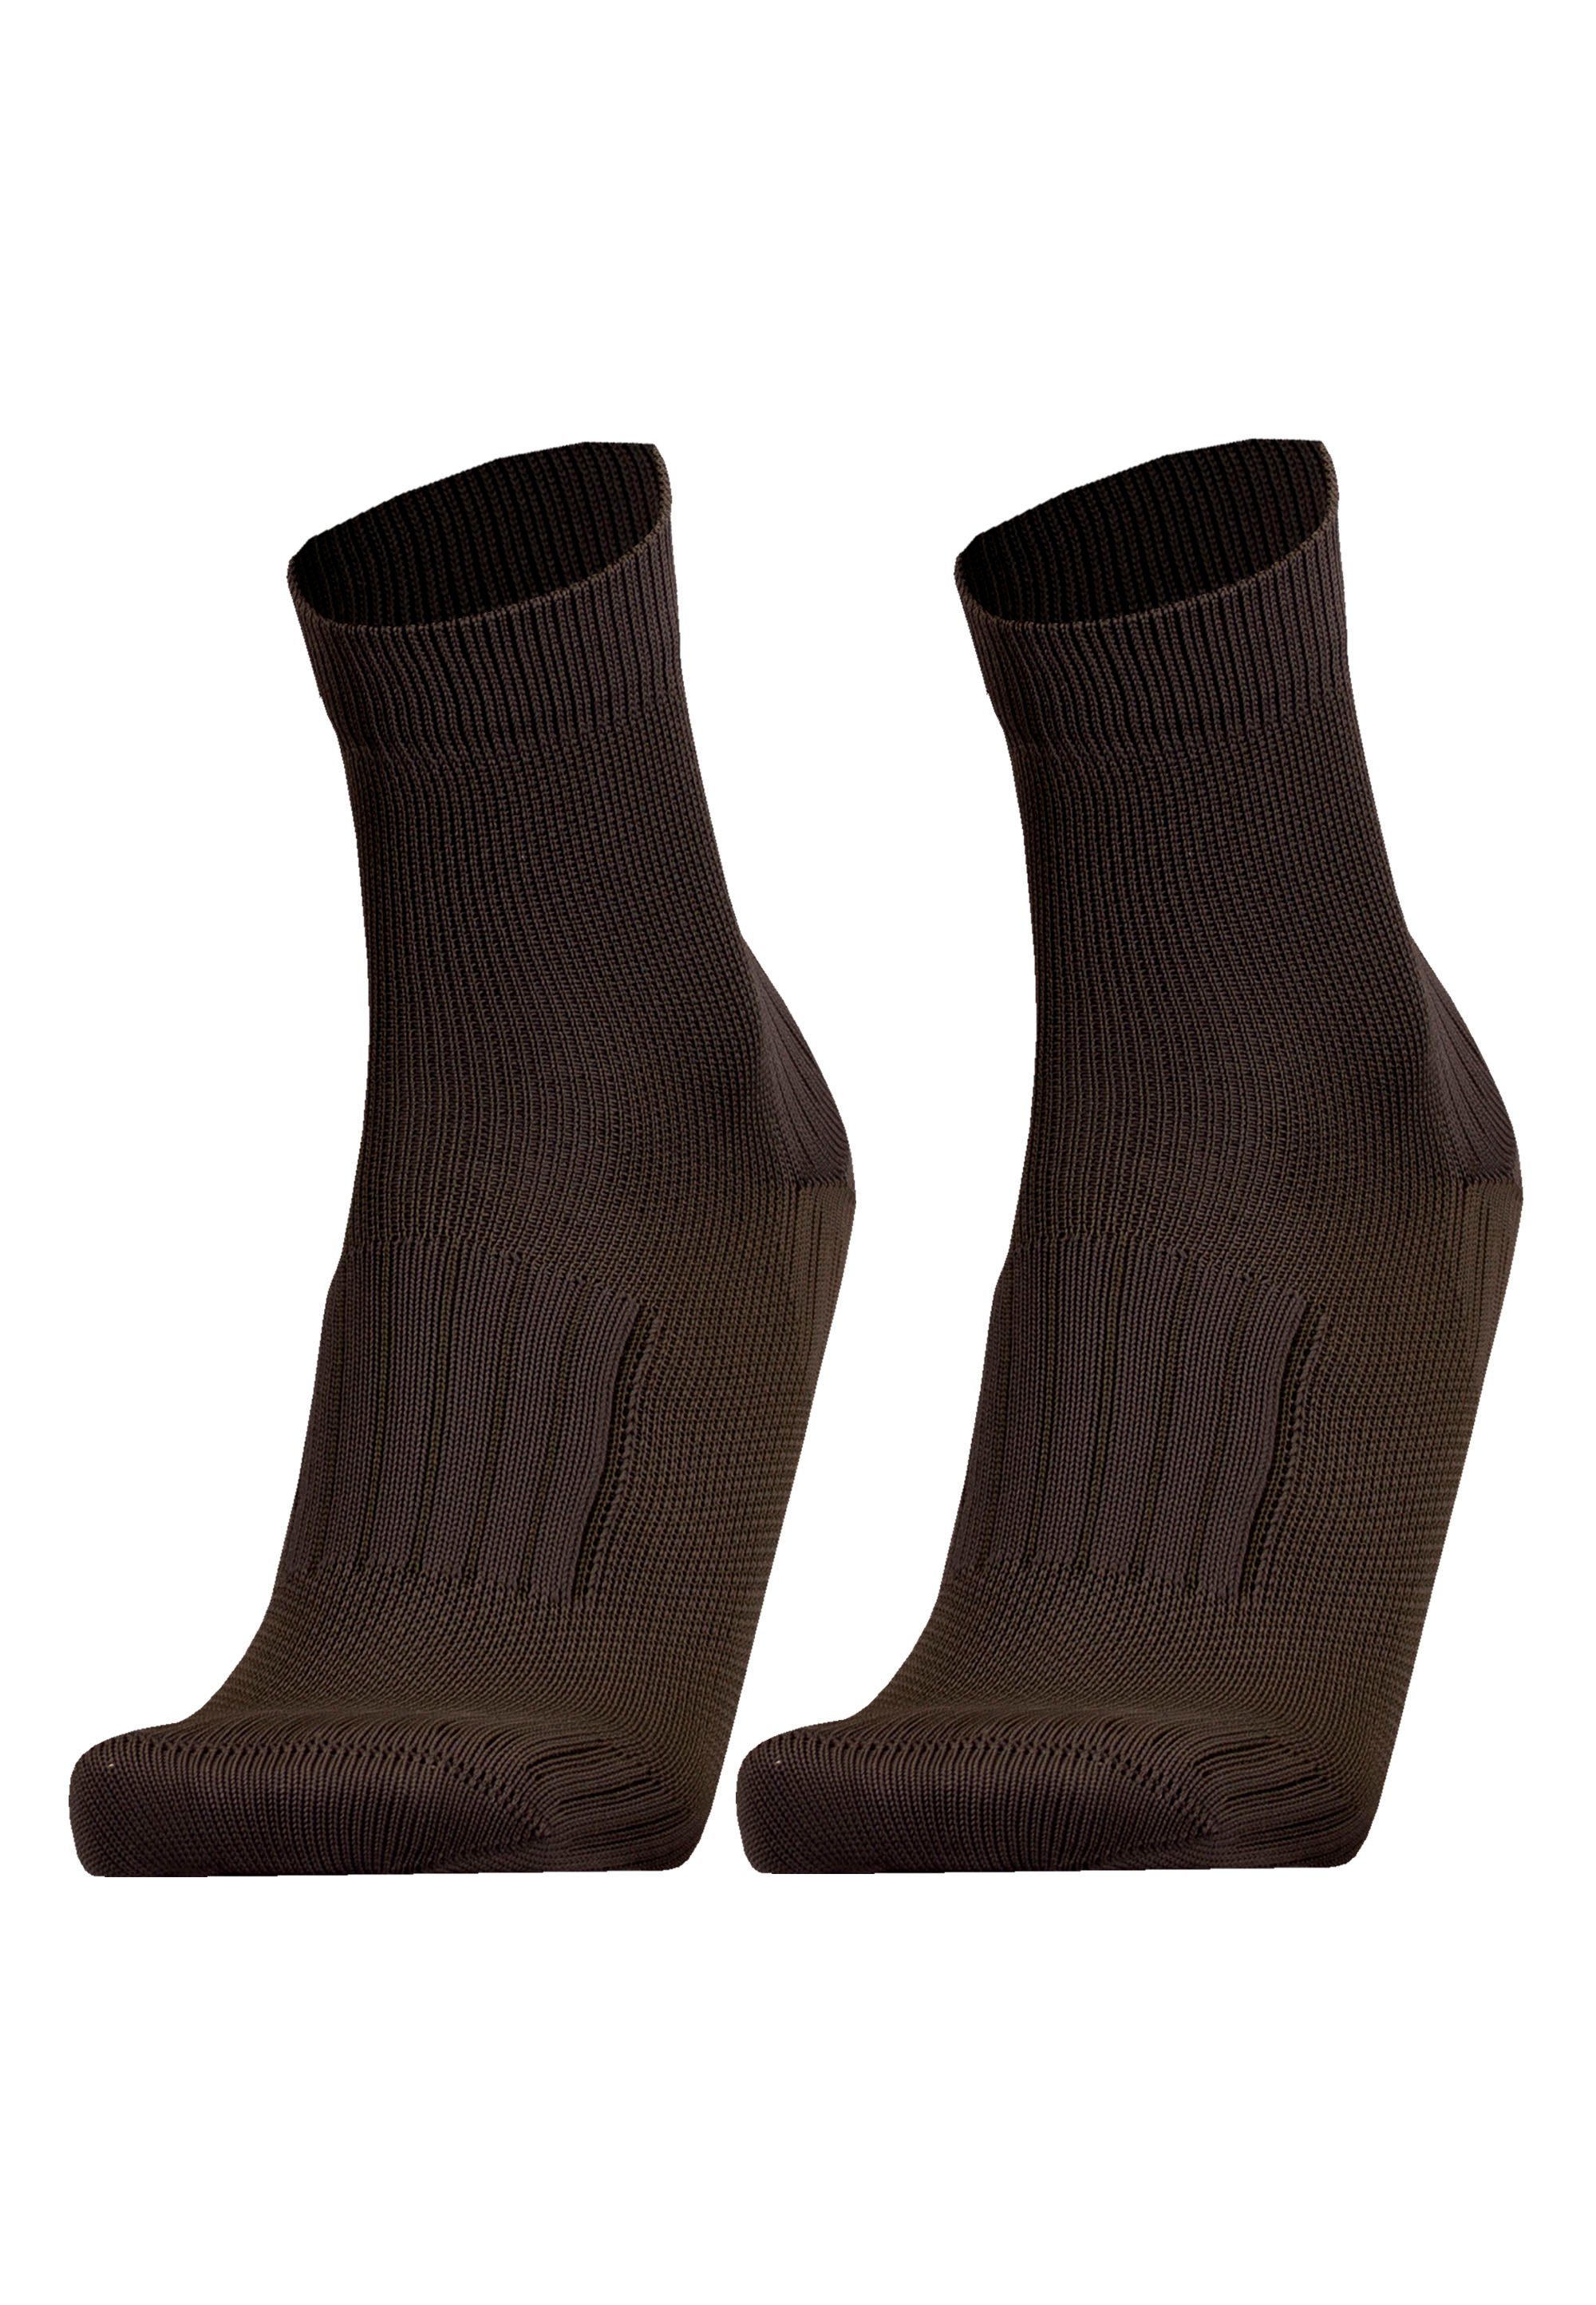 FRONT Rist (2-Paar) UphillSport Pack mit 2er grau gepolstertem Socken